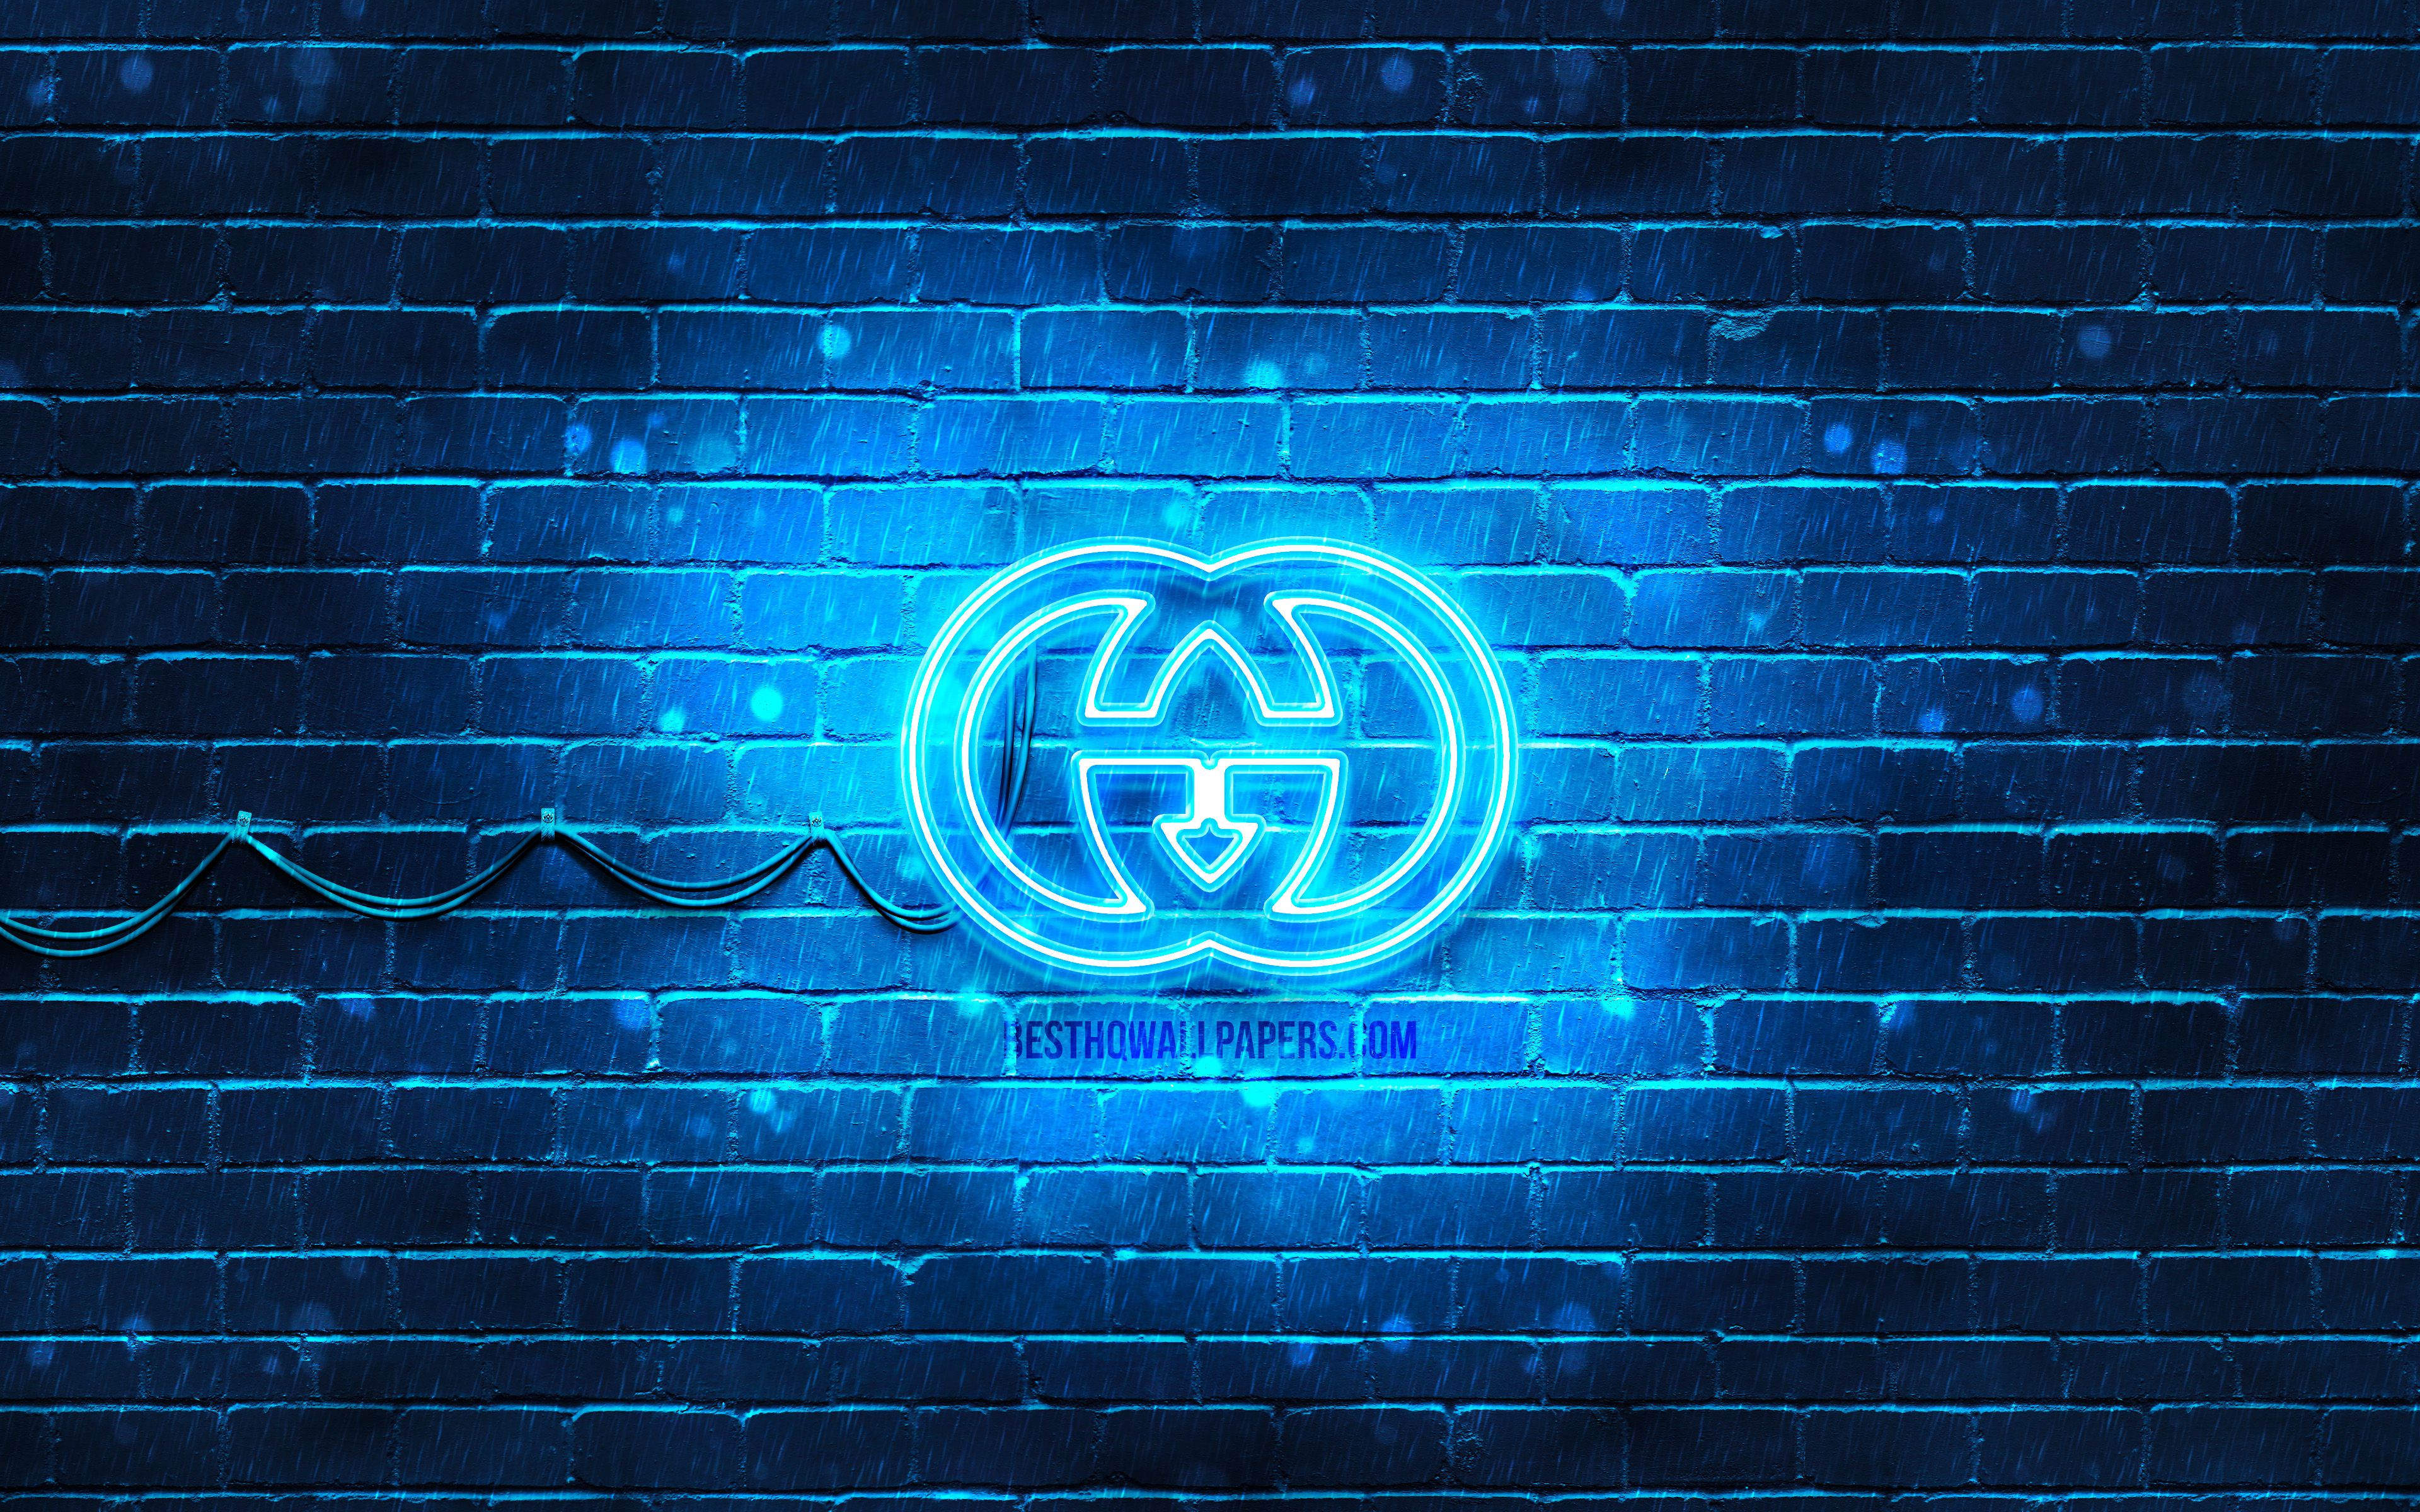 Download wallpaper Gucci blue logo, 4k, blue brickwall, Gucci logo, fashion brands, Gucci neon logo, Gucci for desktop with resolution 3840x2400. High Quality HD picture wallpaper